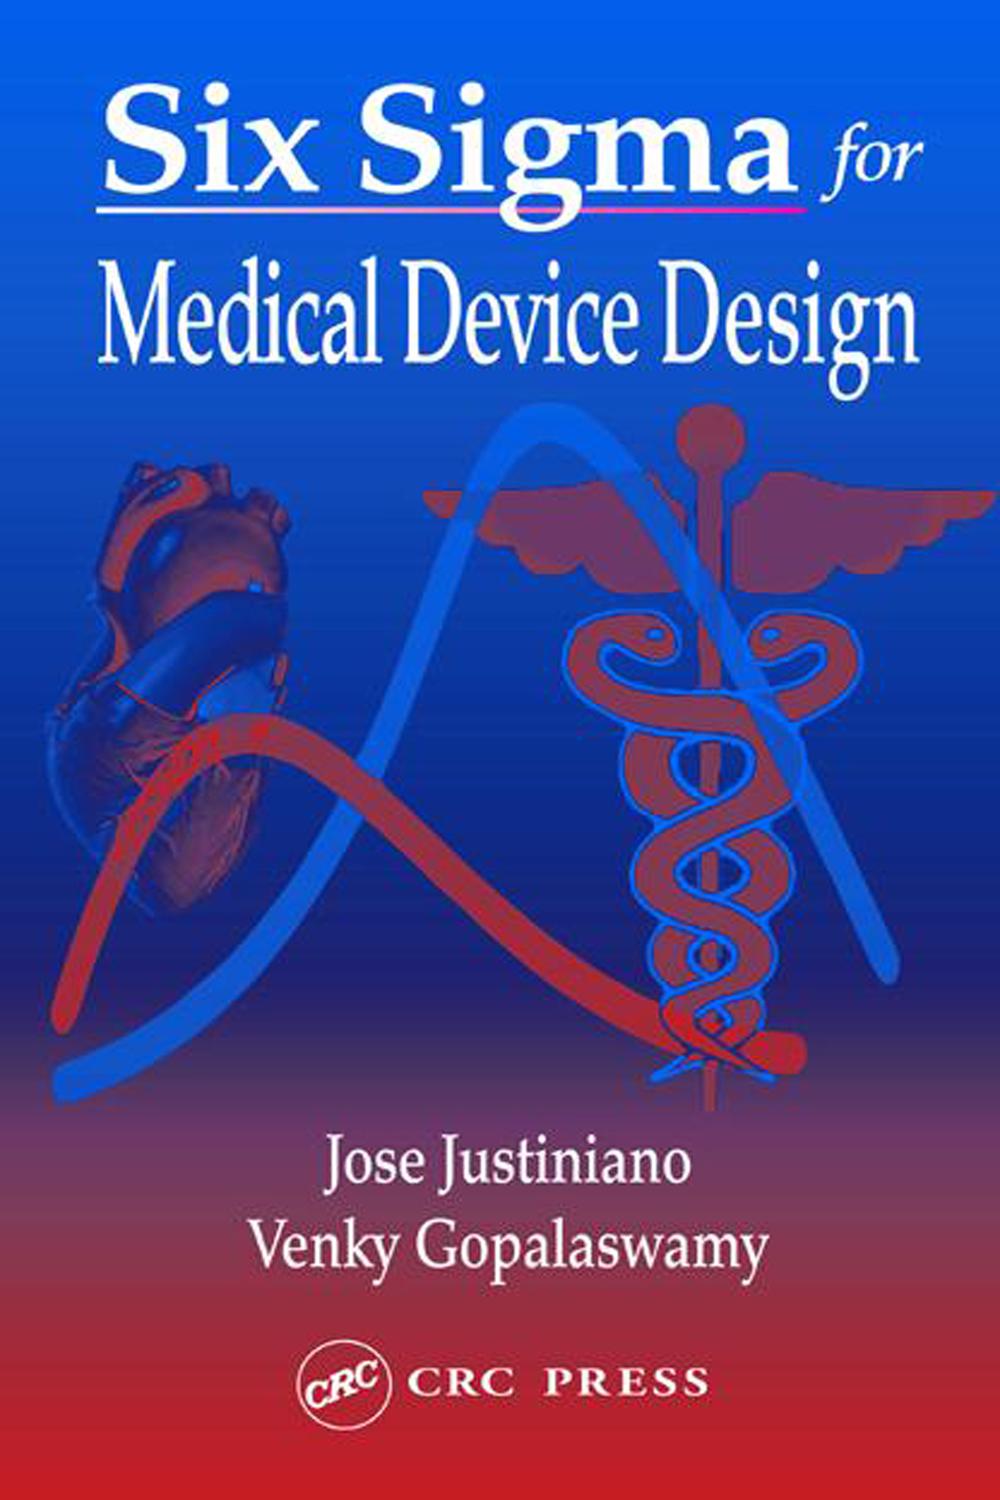 Six Sigma for Medical Device Design - Jose Justiniano, Venky Gopalaswamy